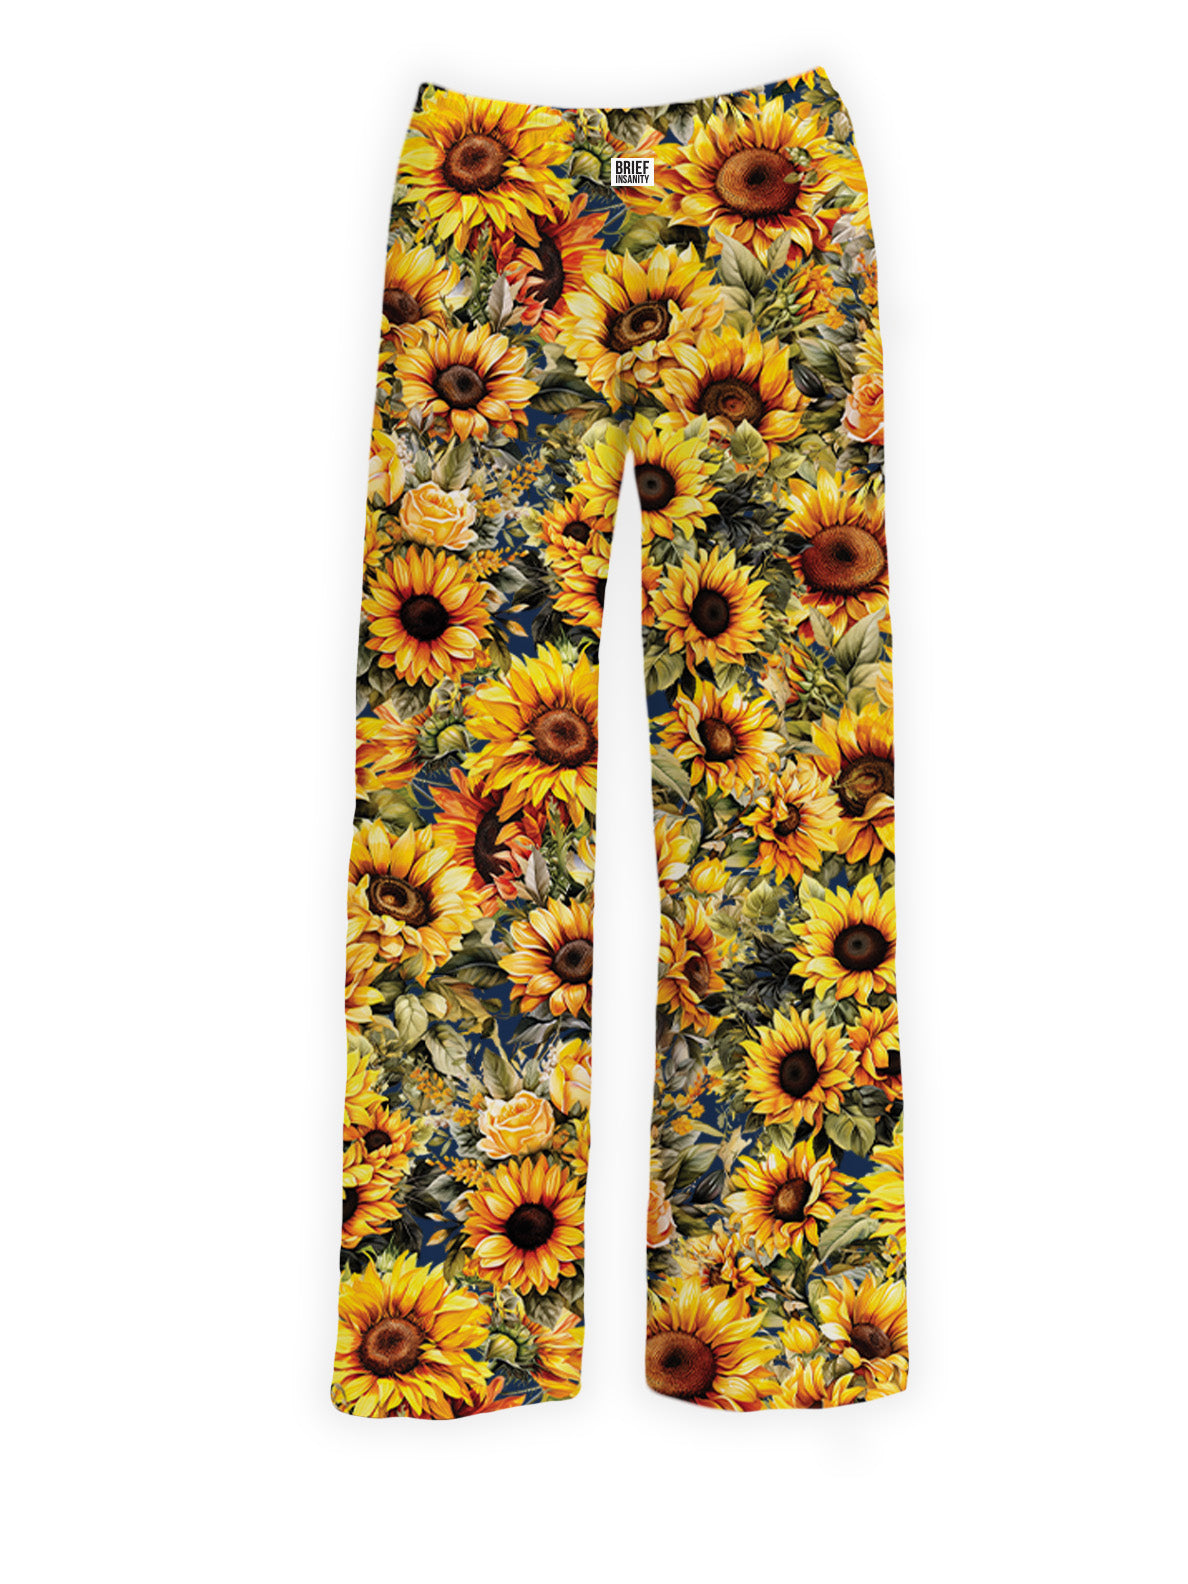 BRIEF INSANITY's Sunflower Pajama Lounge Pants